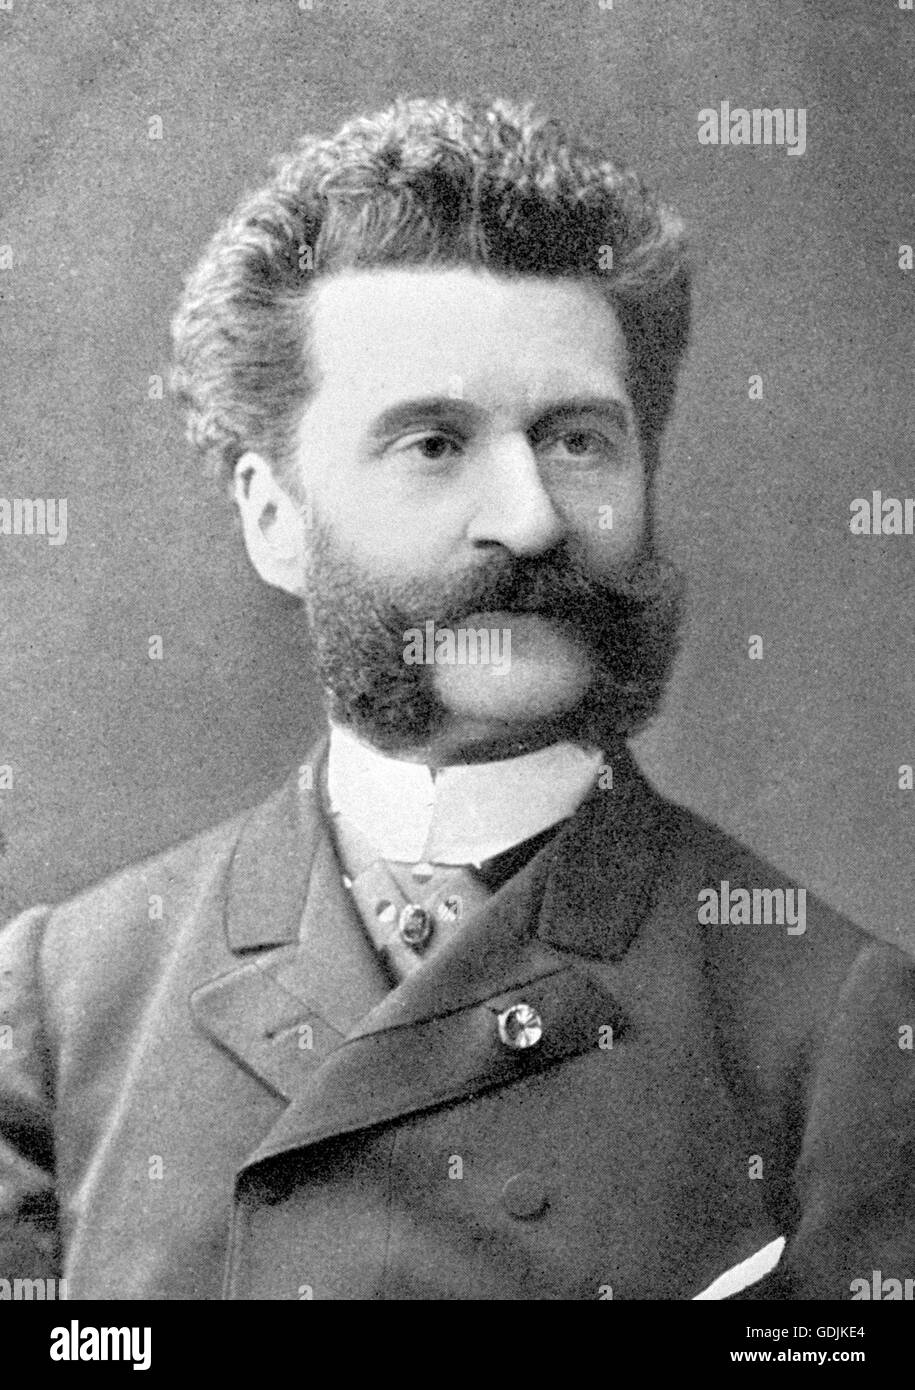 El compositor austríaco Johann Strauss II (1825-1899) Foto de stock